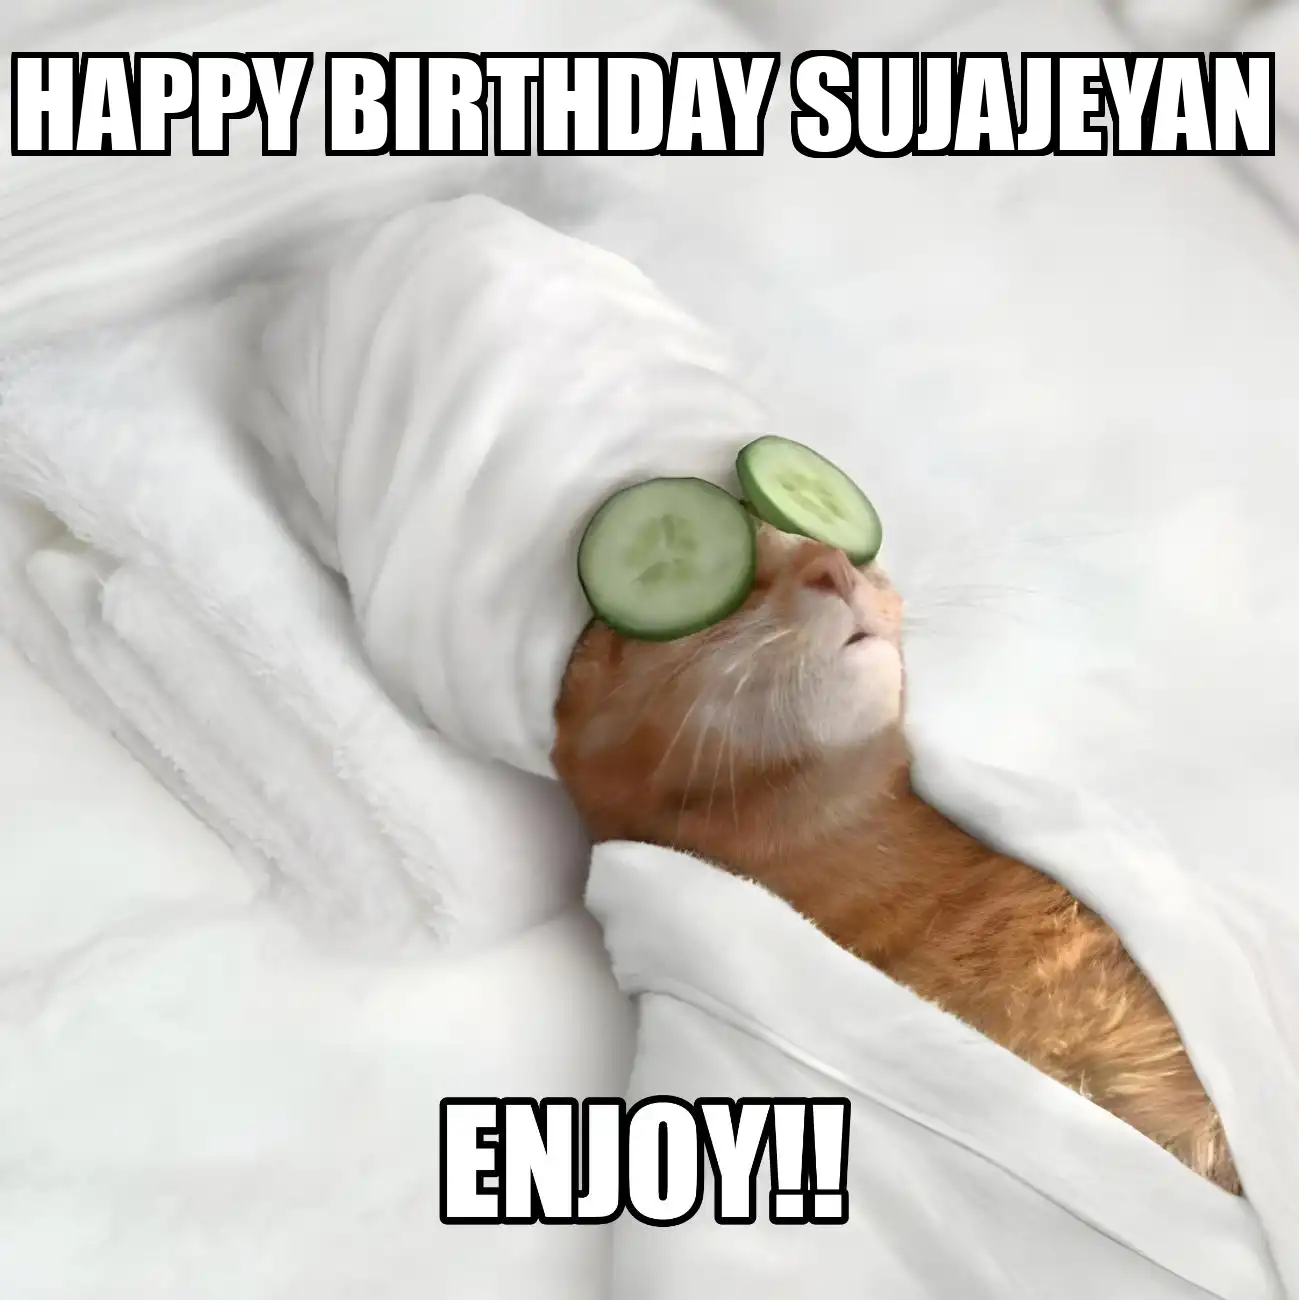 Happy Birthday Sujajeyan Enjoy Cat Meme